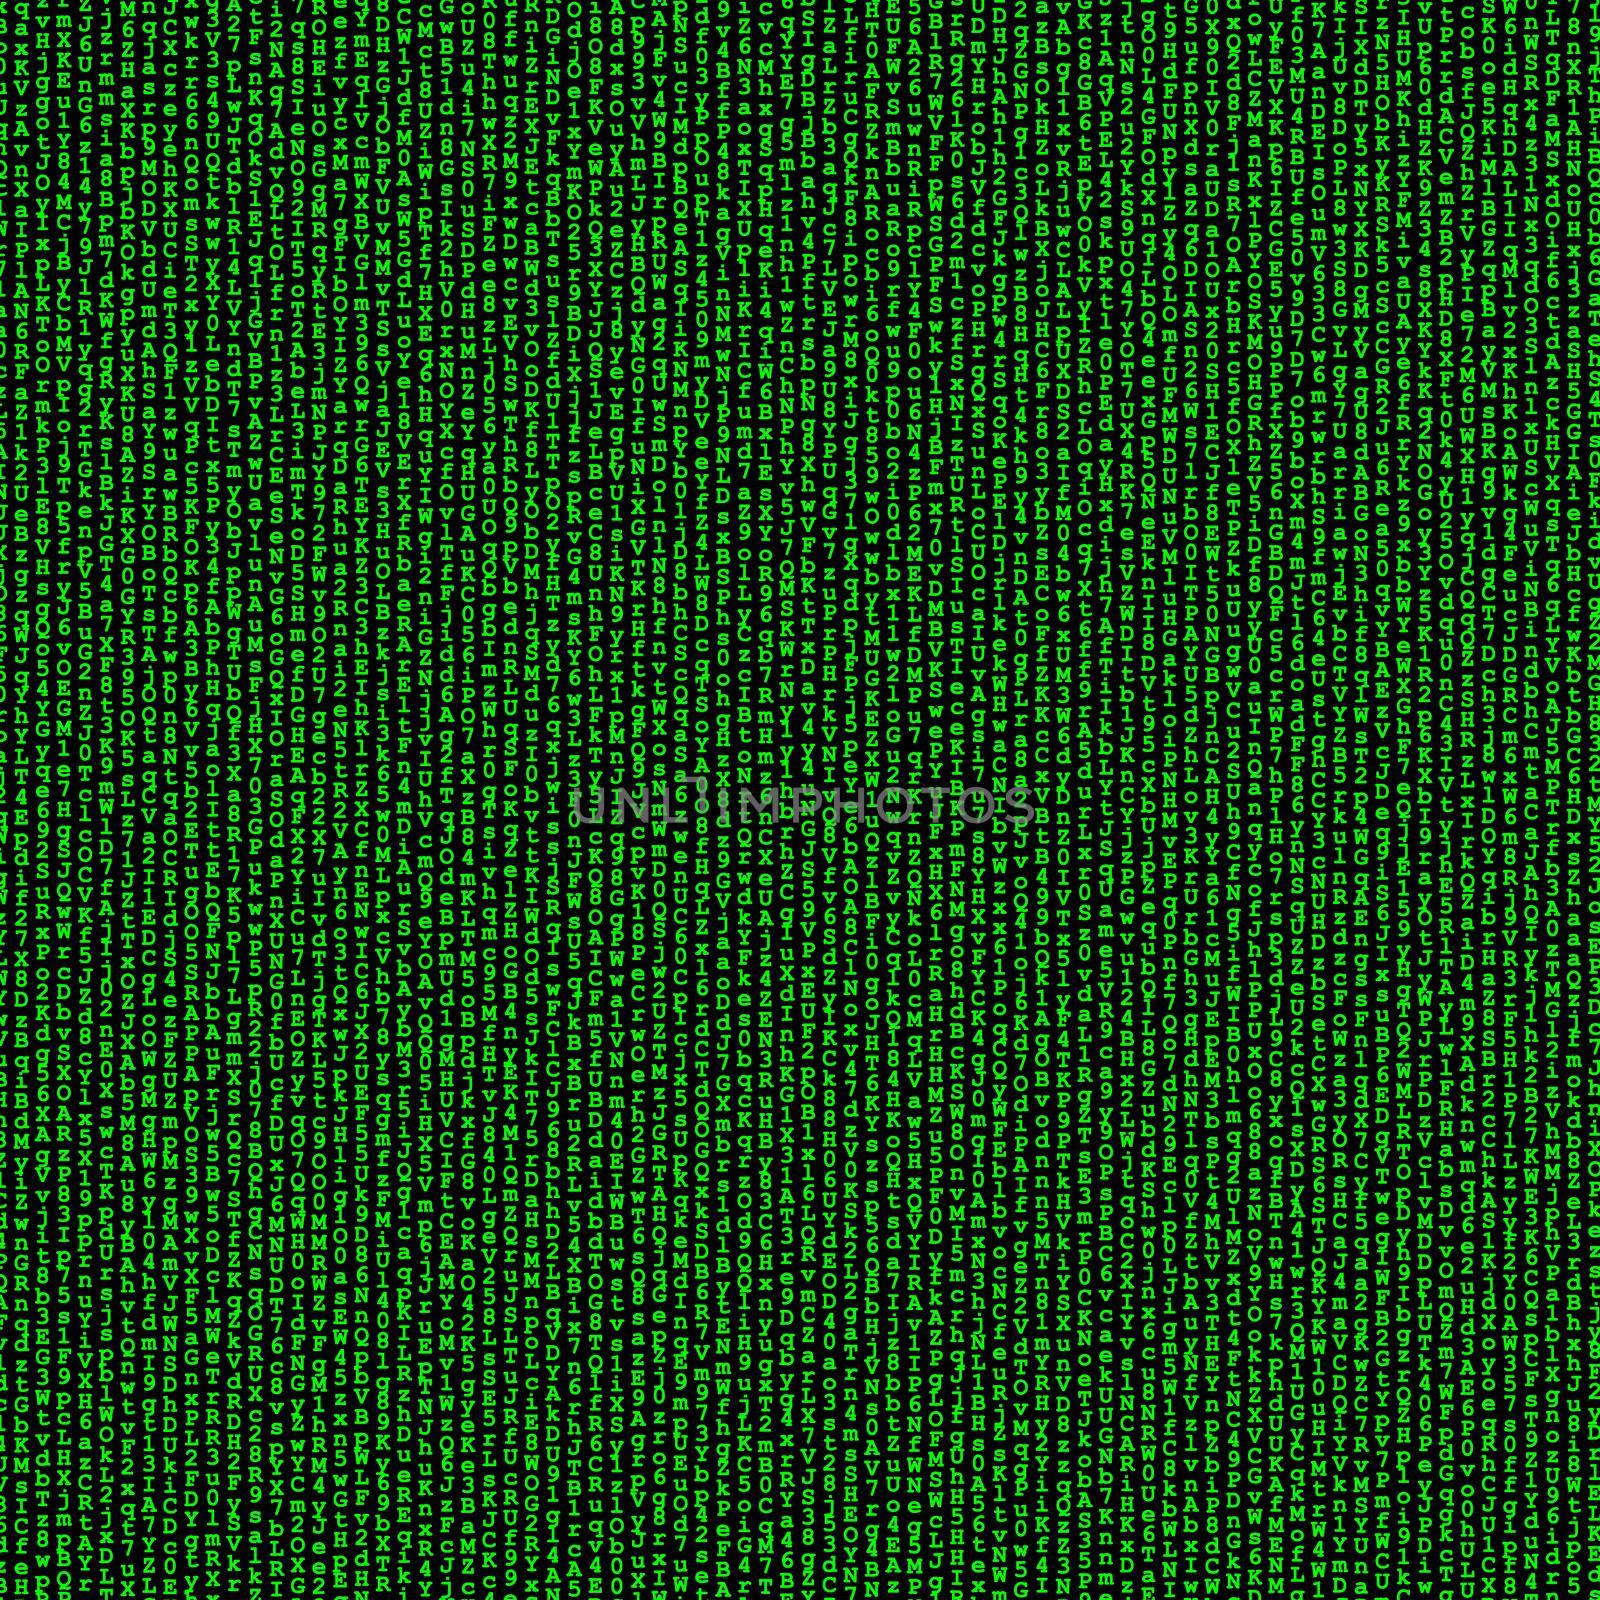 Green digital background, vertical lines of random letters and digits on black, matrix concept